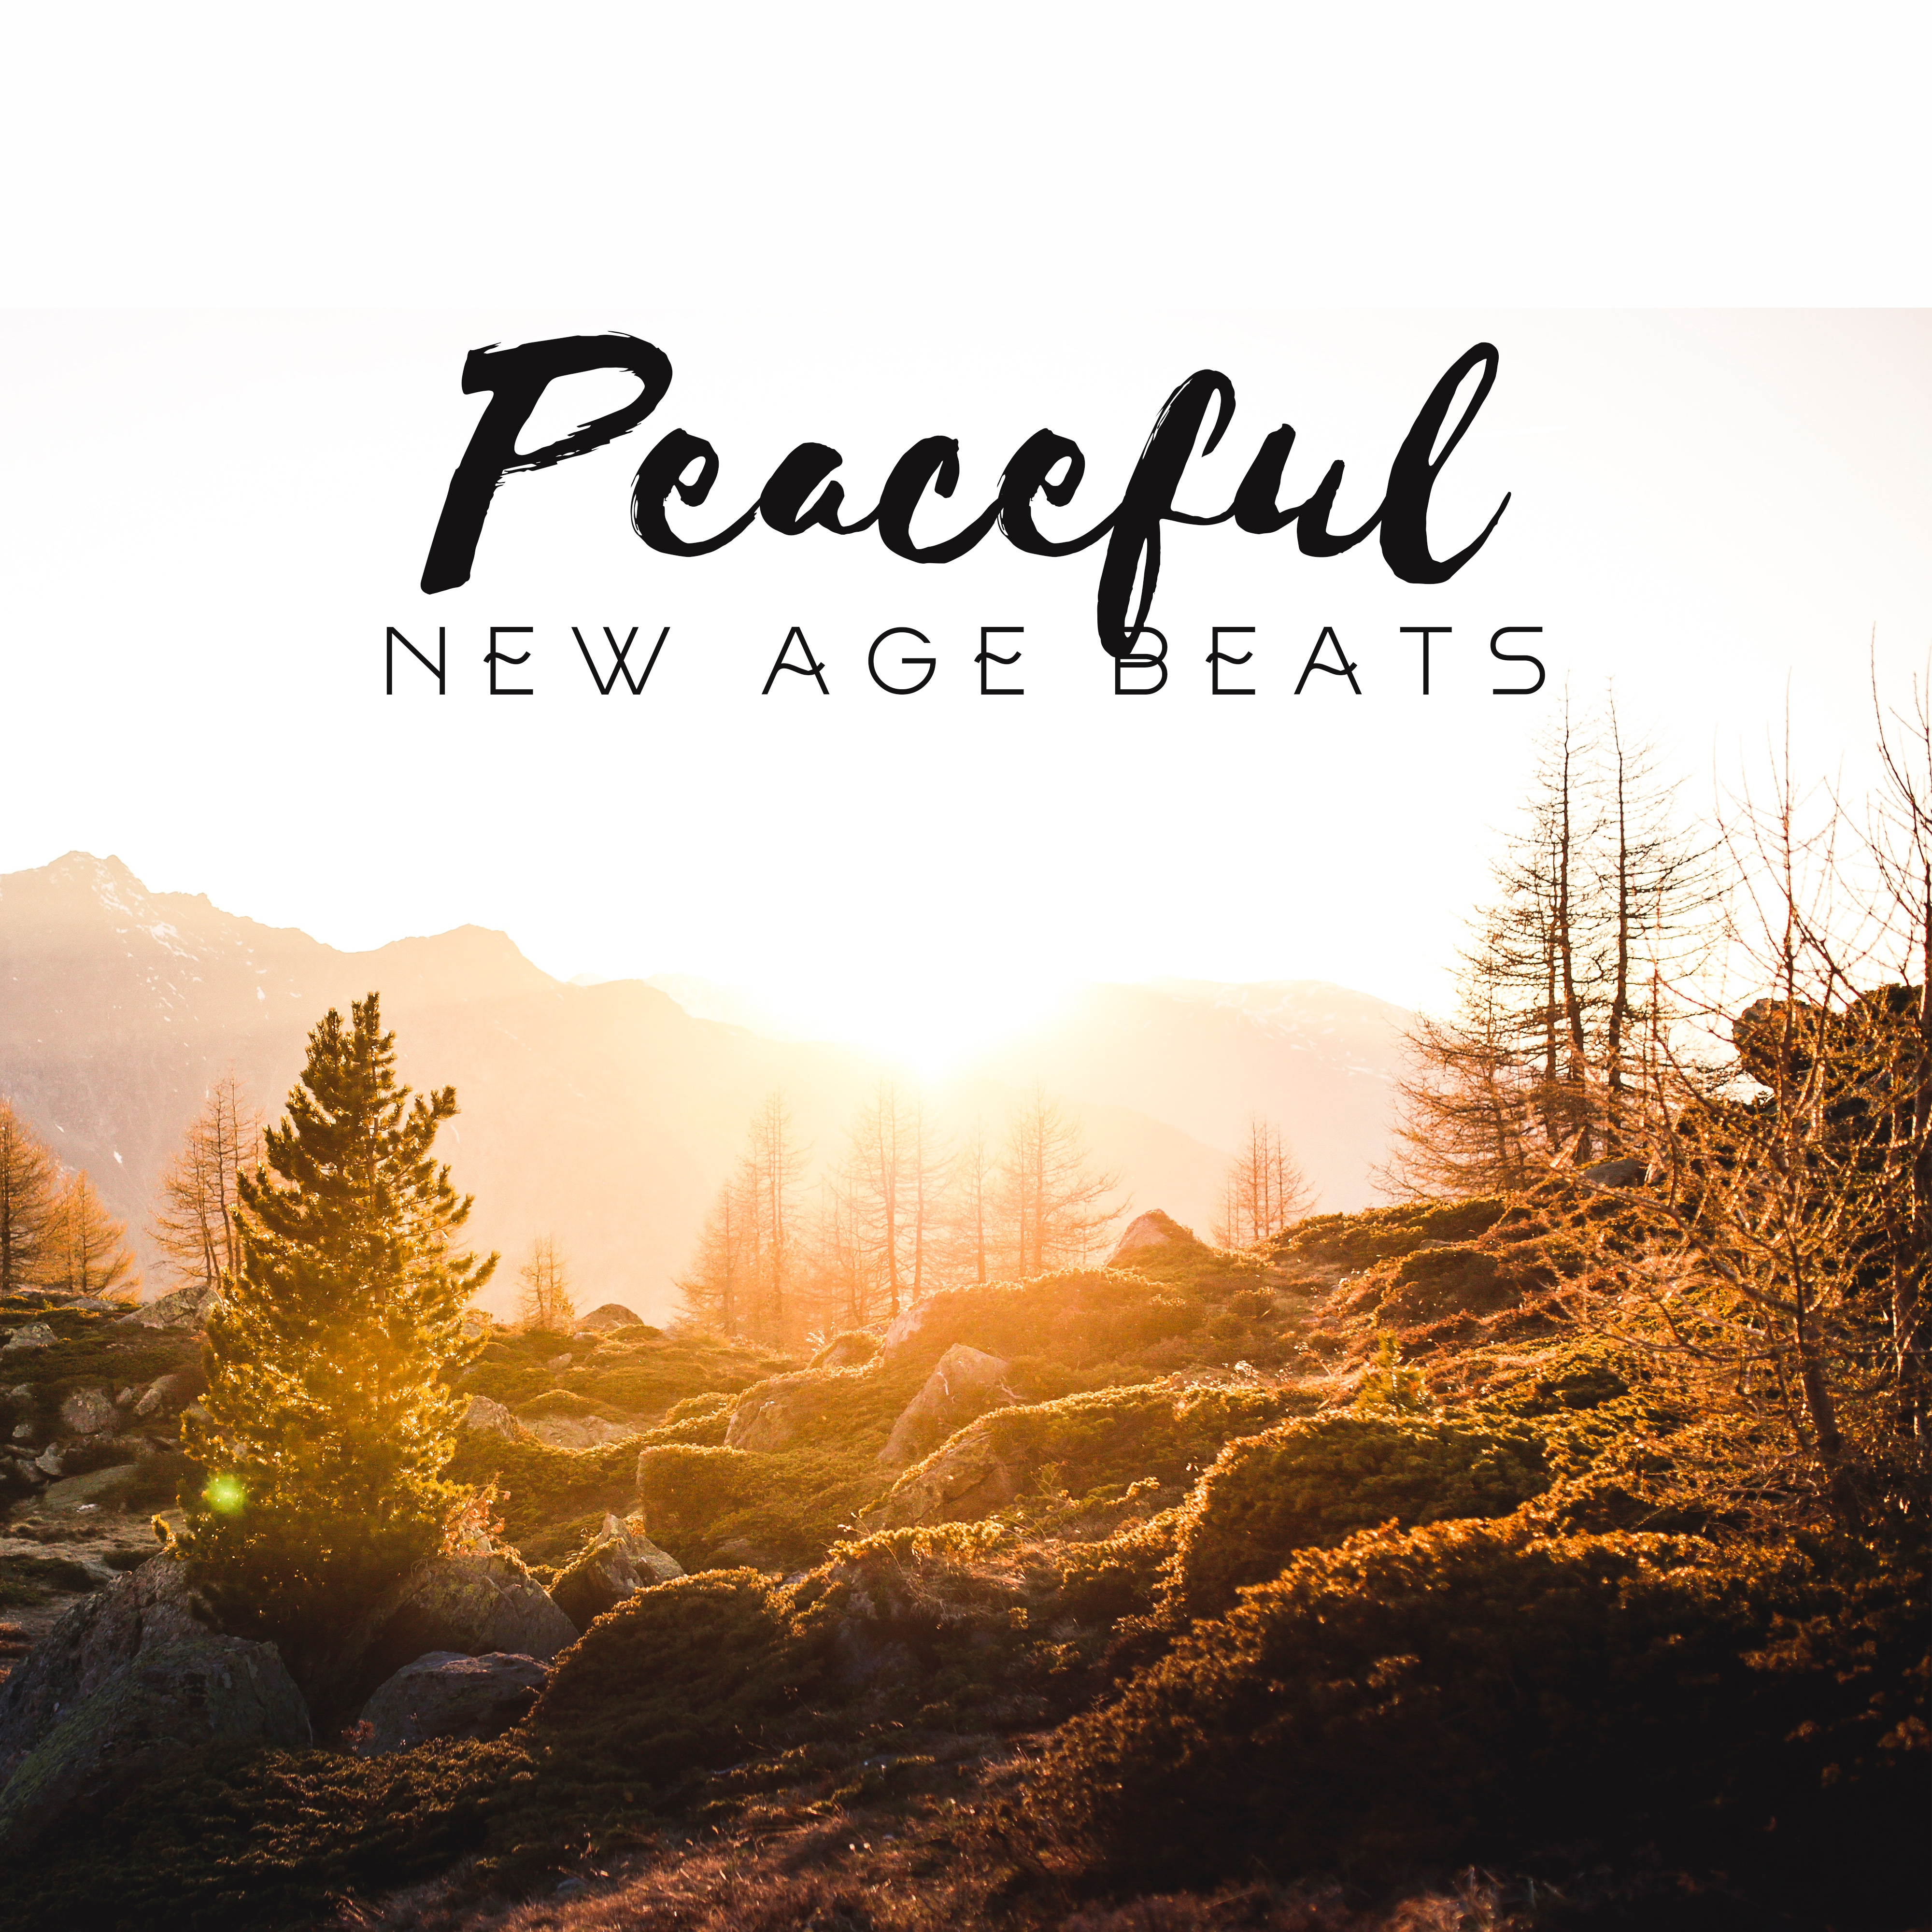 Peaceful New Age Beats